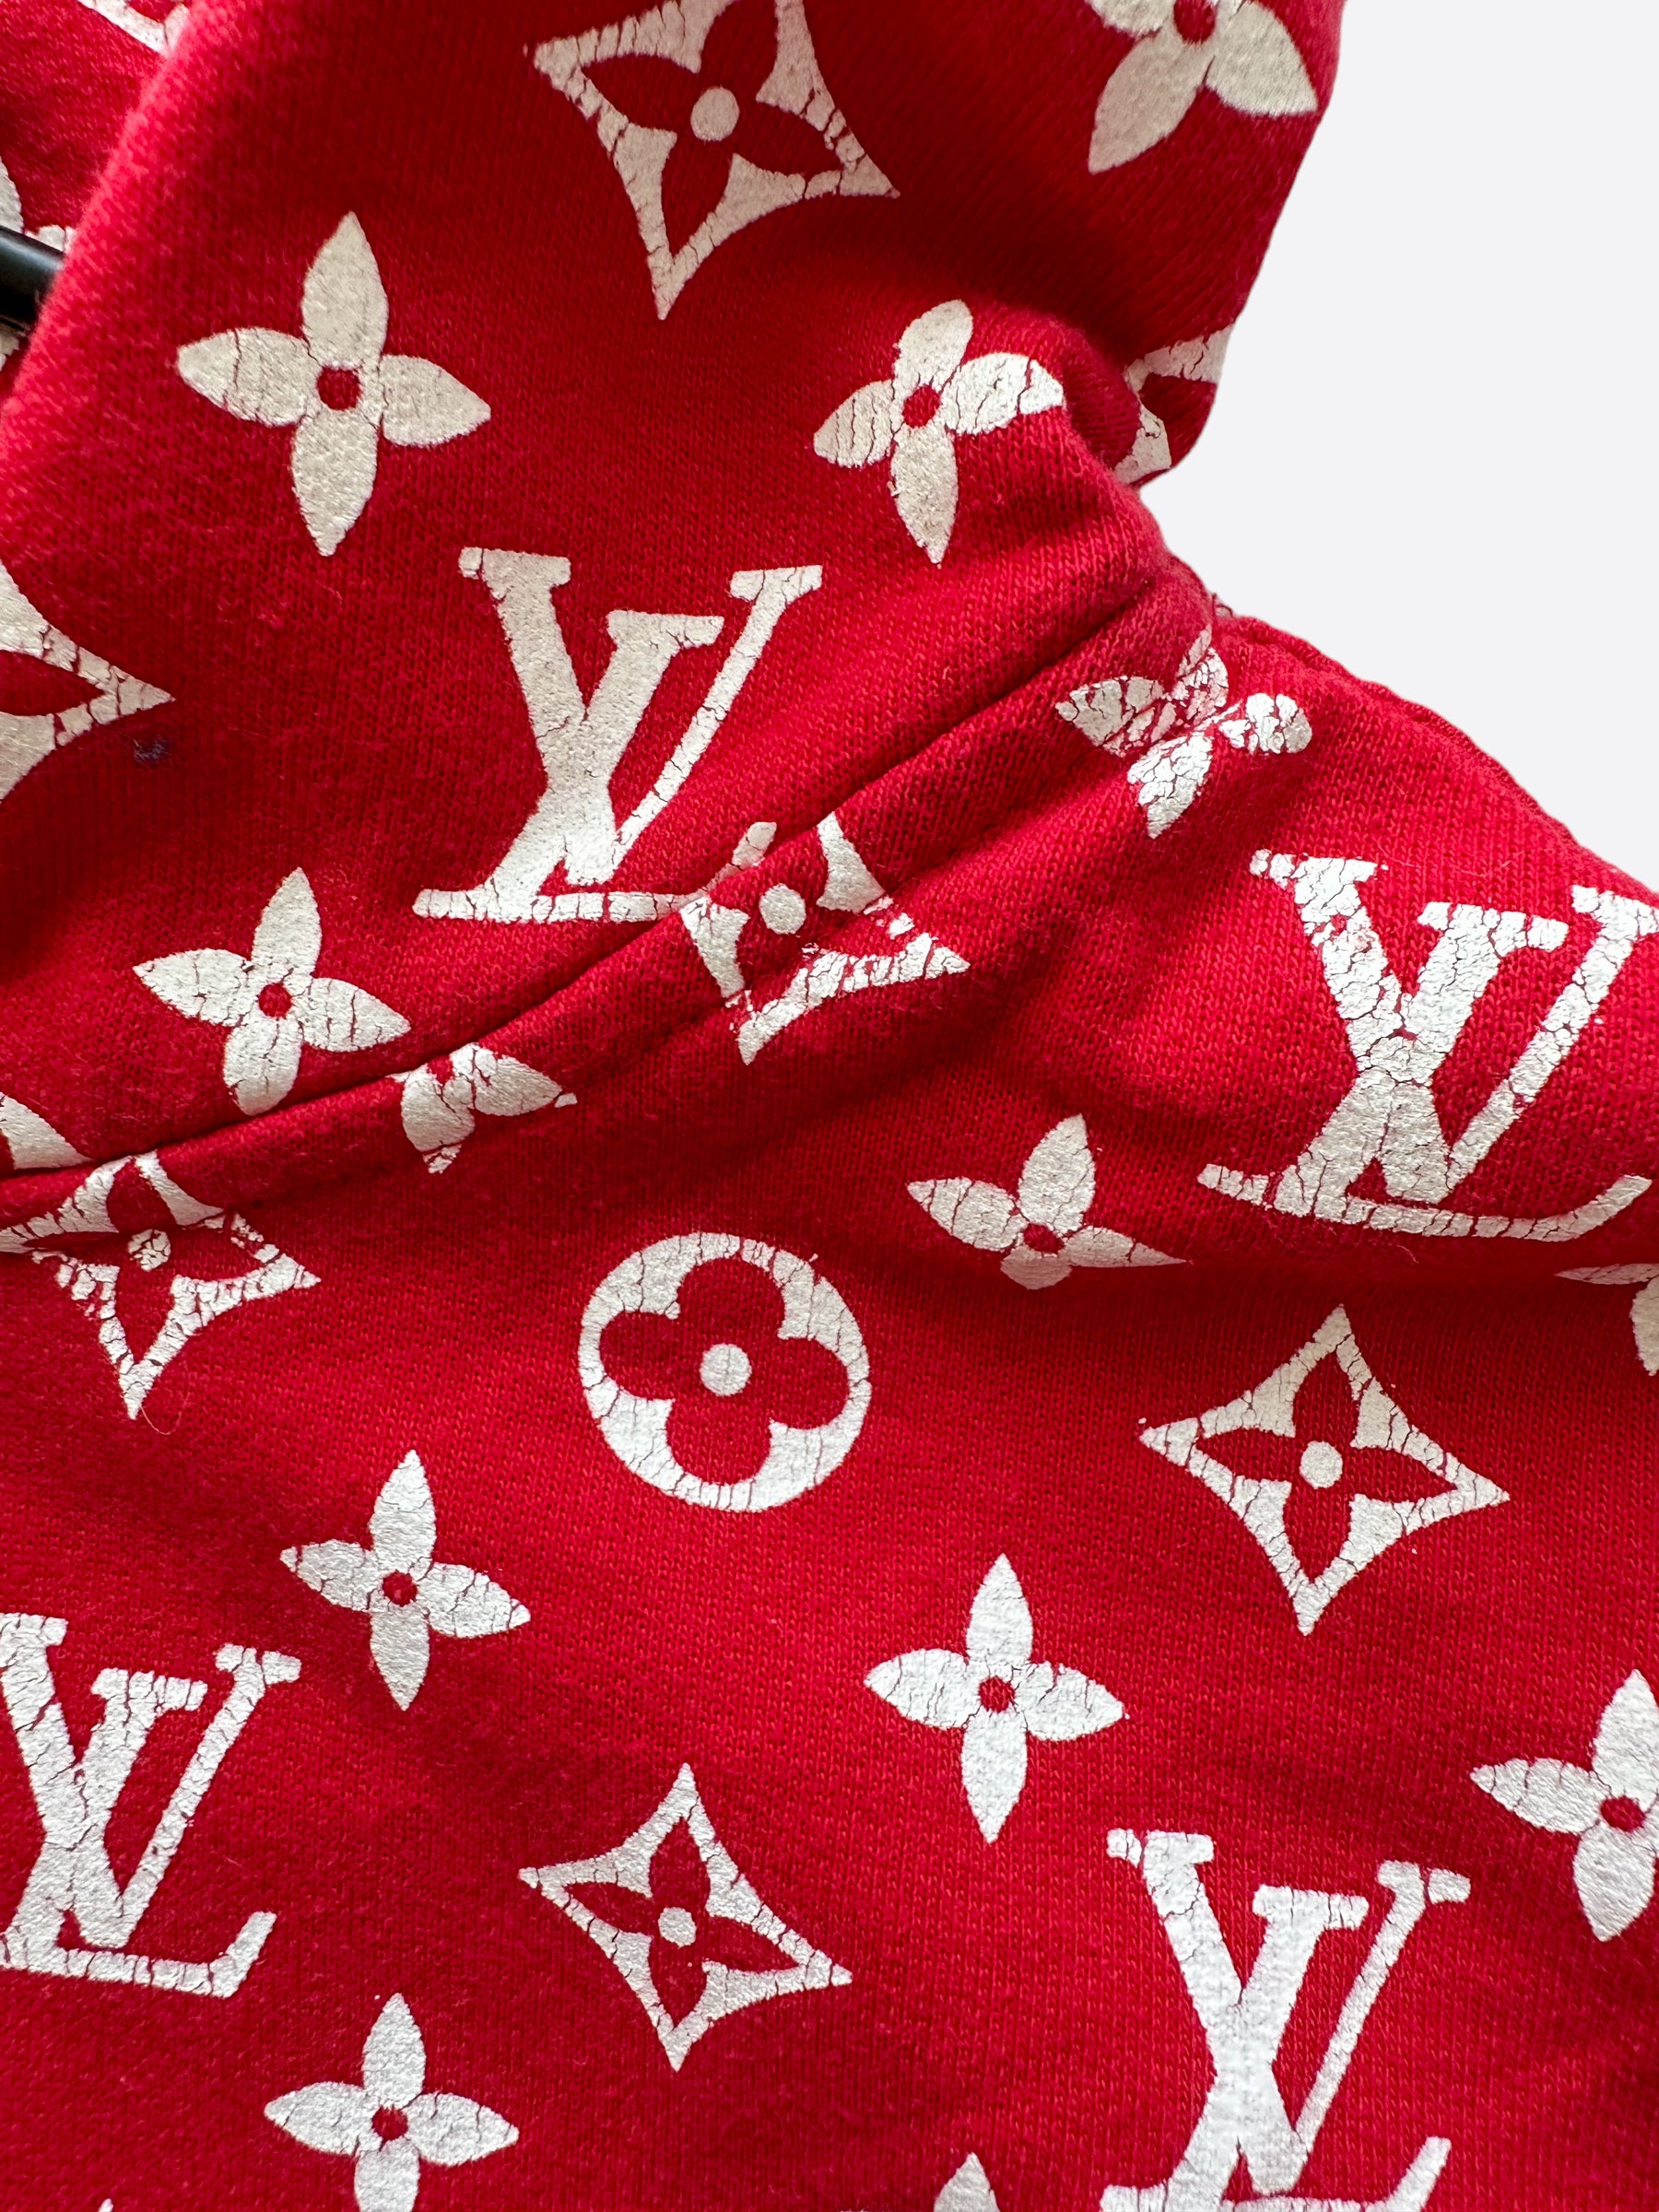 Louis Vuitton Supreme Box Logo Monogram Red White Hoodie